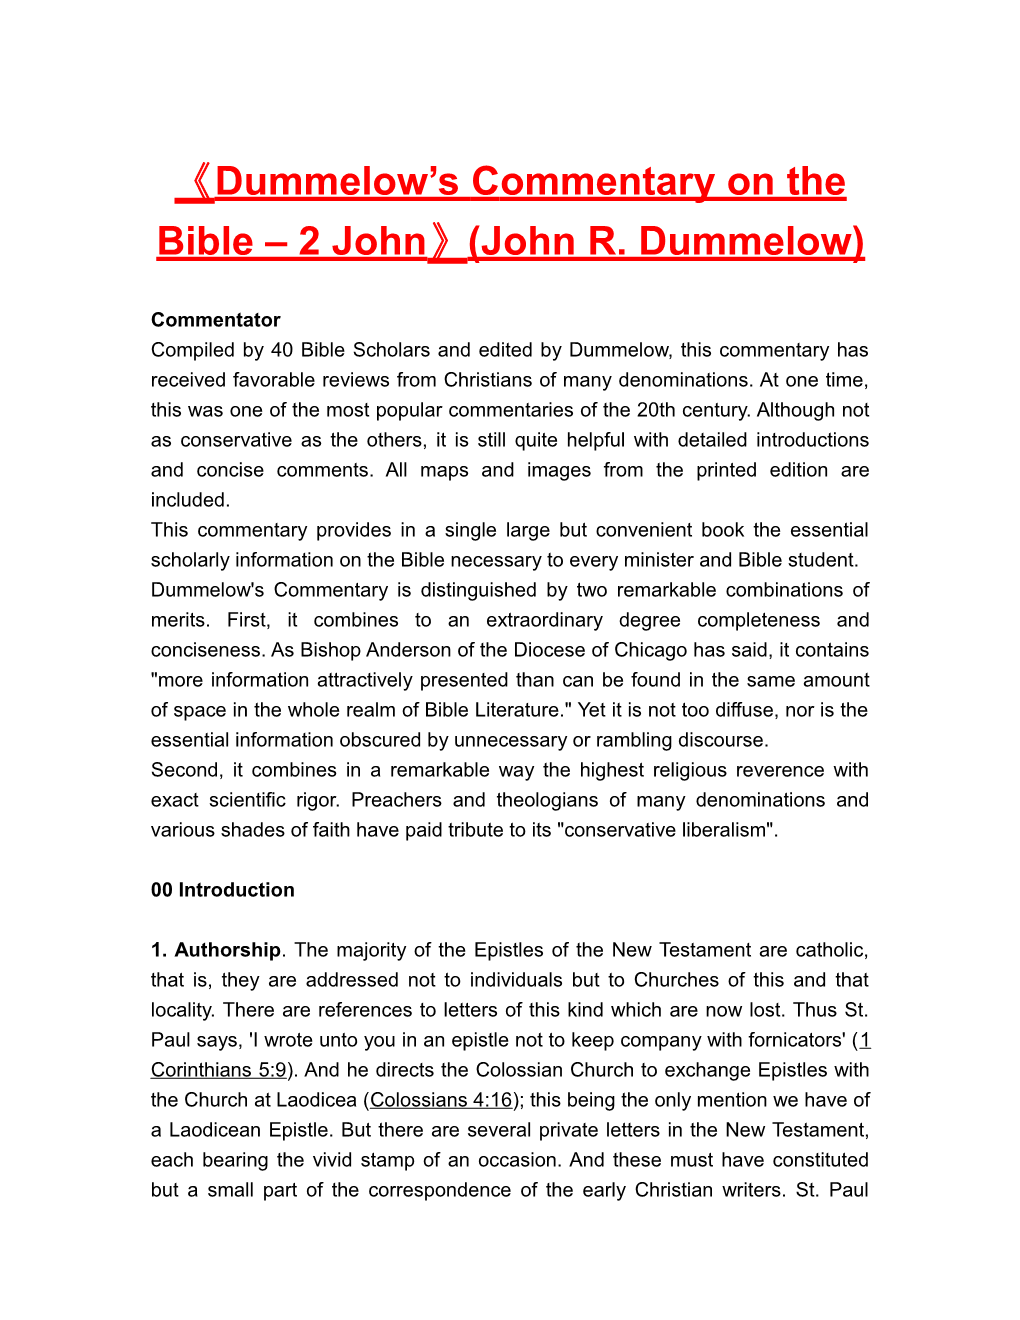 Dummelow Scommentaryon the Bible 2 John (John R. Dummelow)